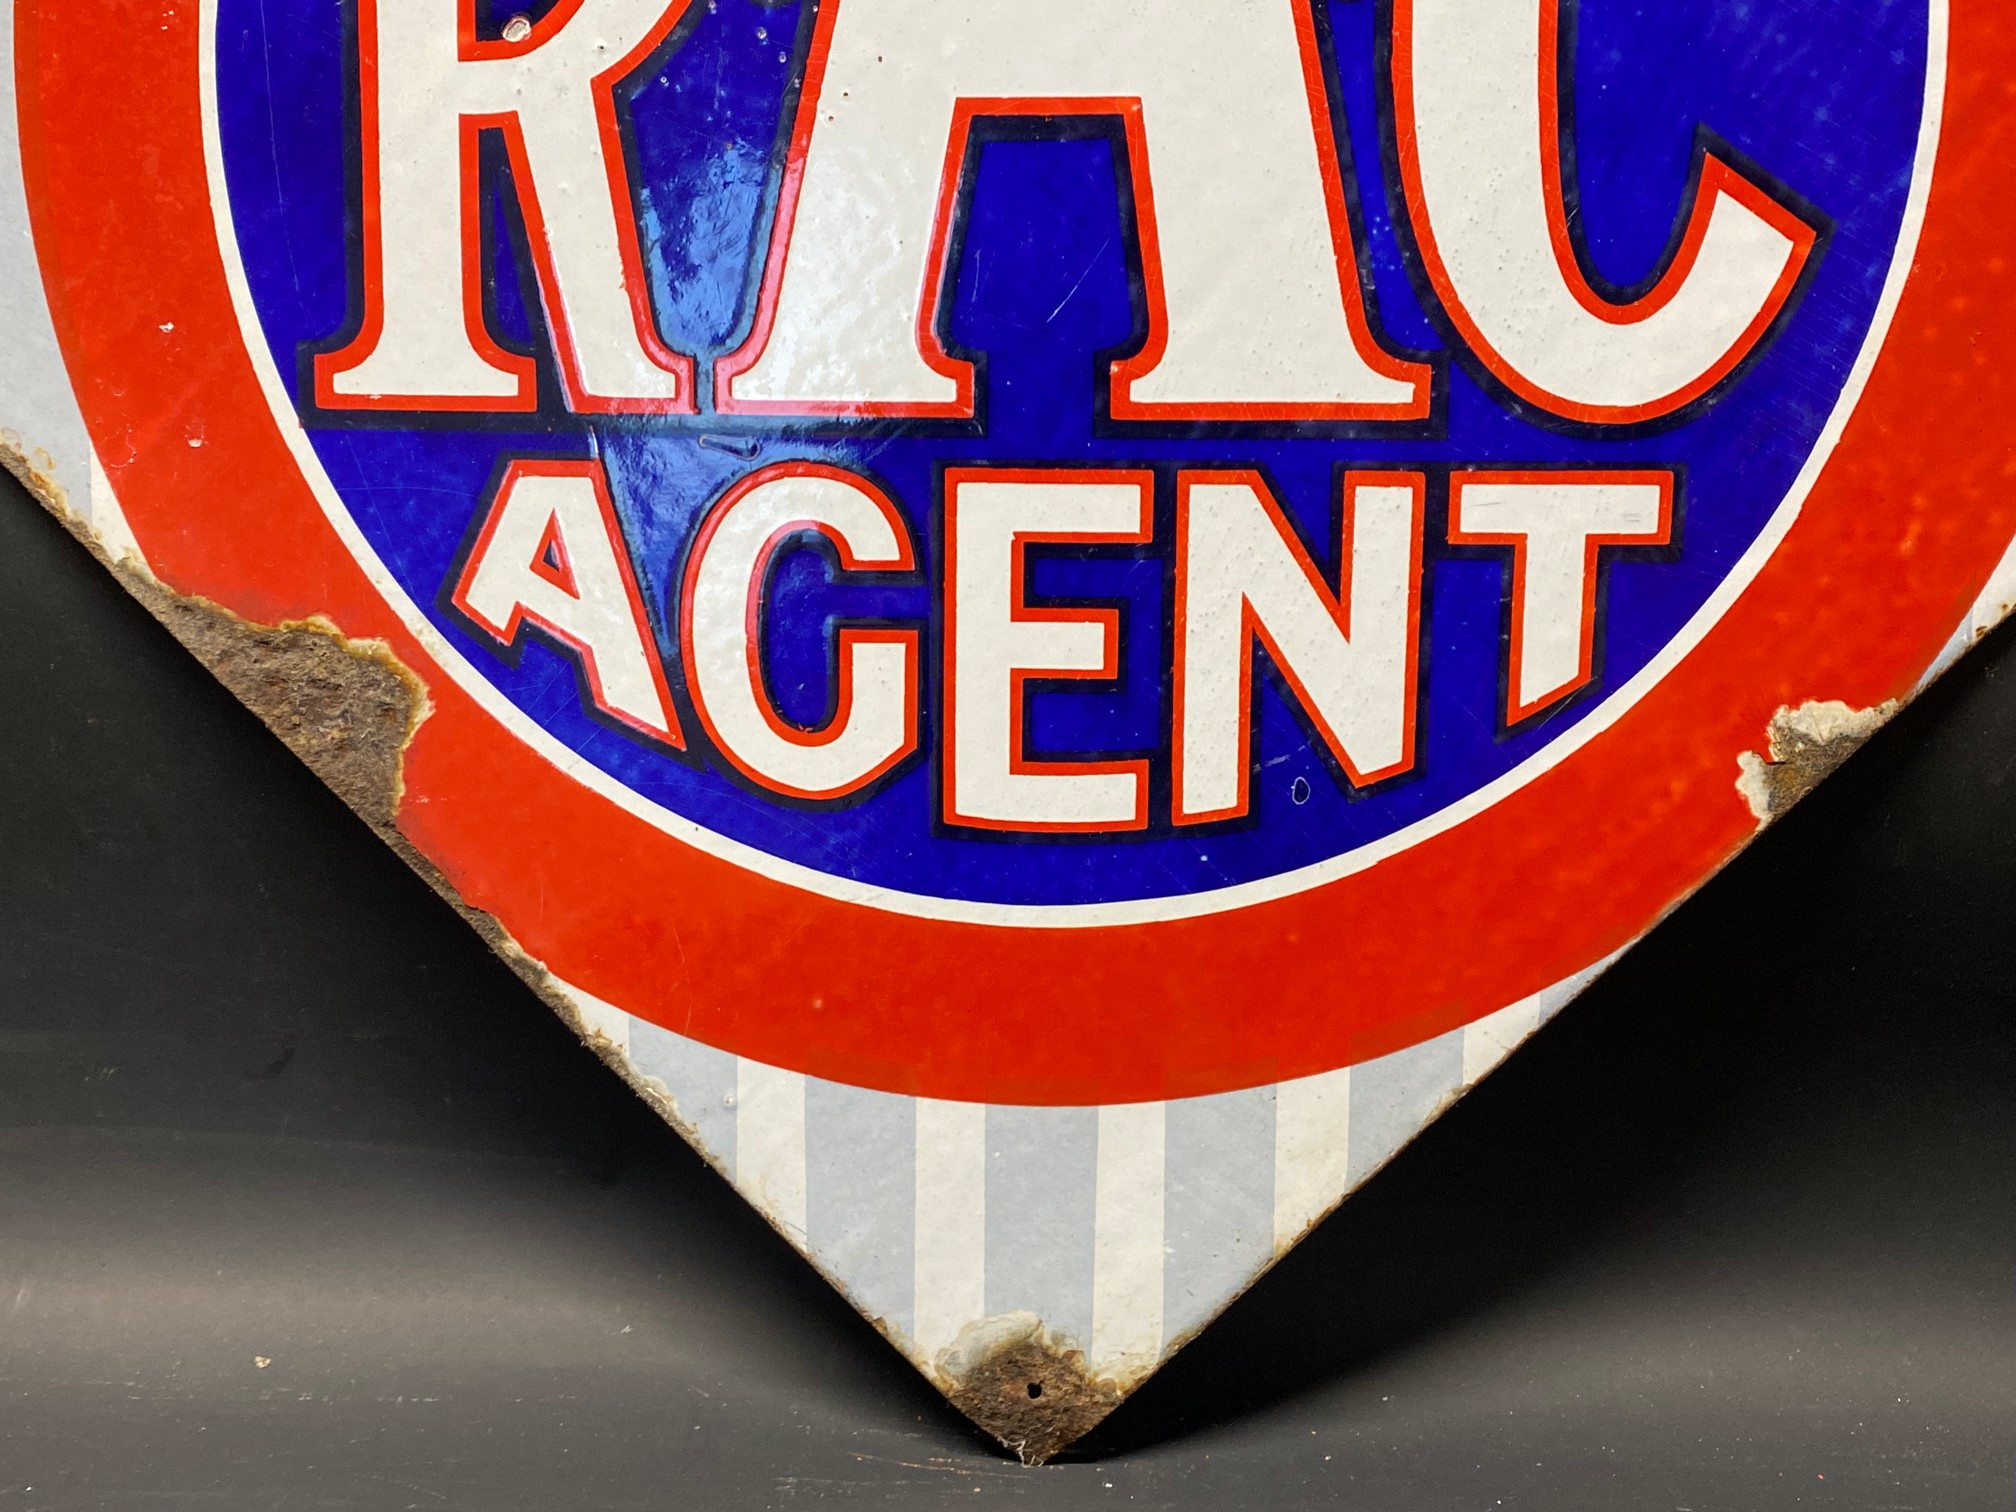 An RAC Agent lozenge shaped double sided enamel sign, 28 x 28". - Image 7 of 7